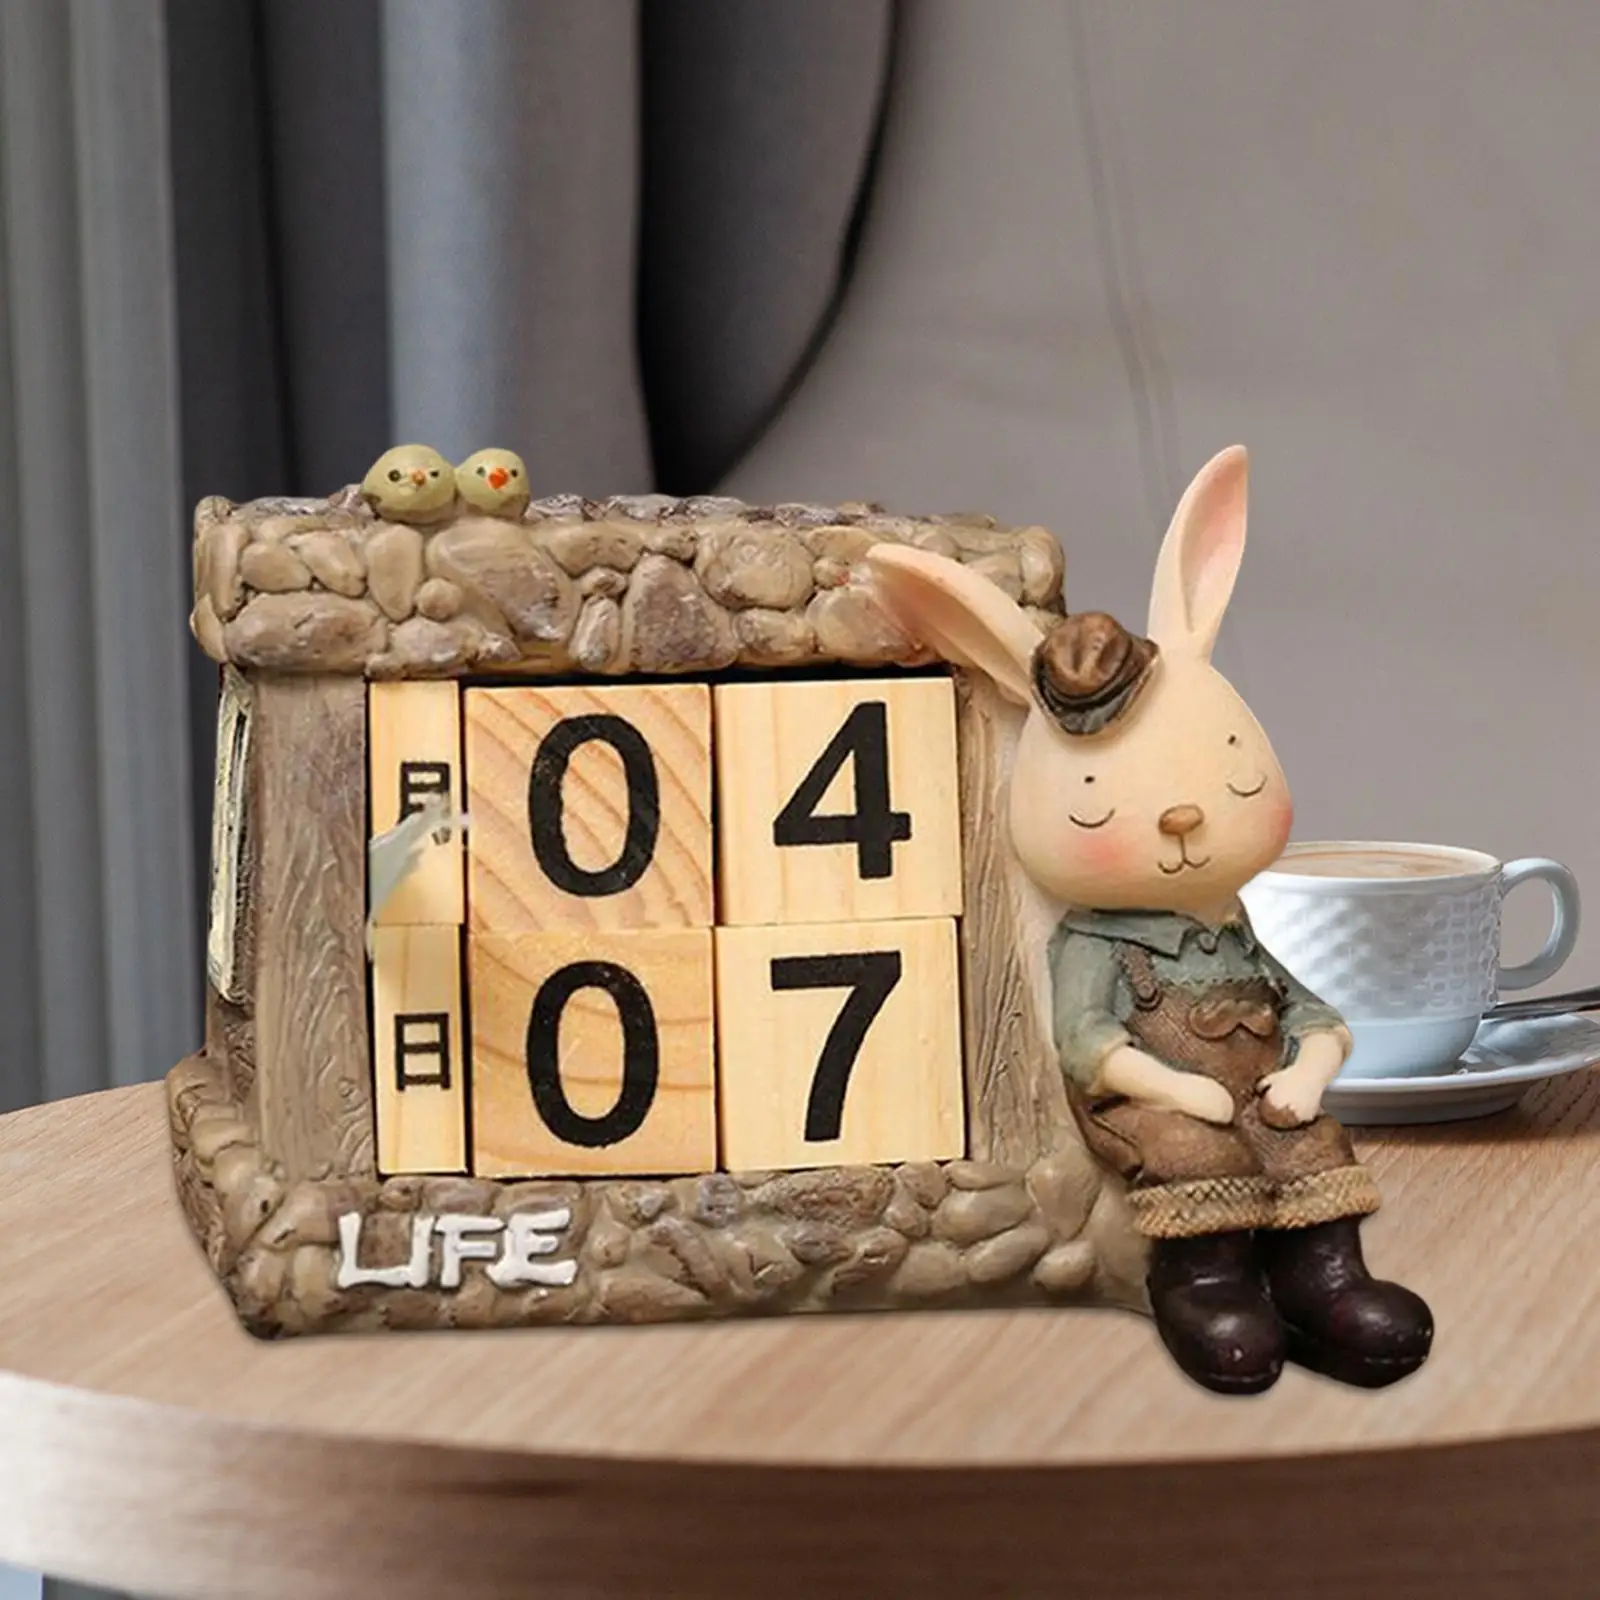 Wood Perpetual Calendar, Nordic Style Month Date Blocks, Tabletop Calendar, DIY